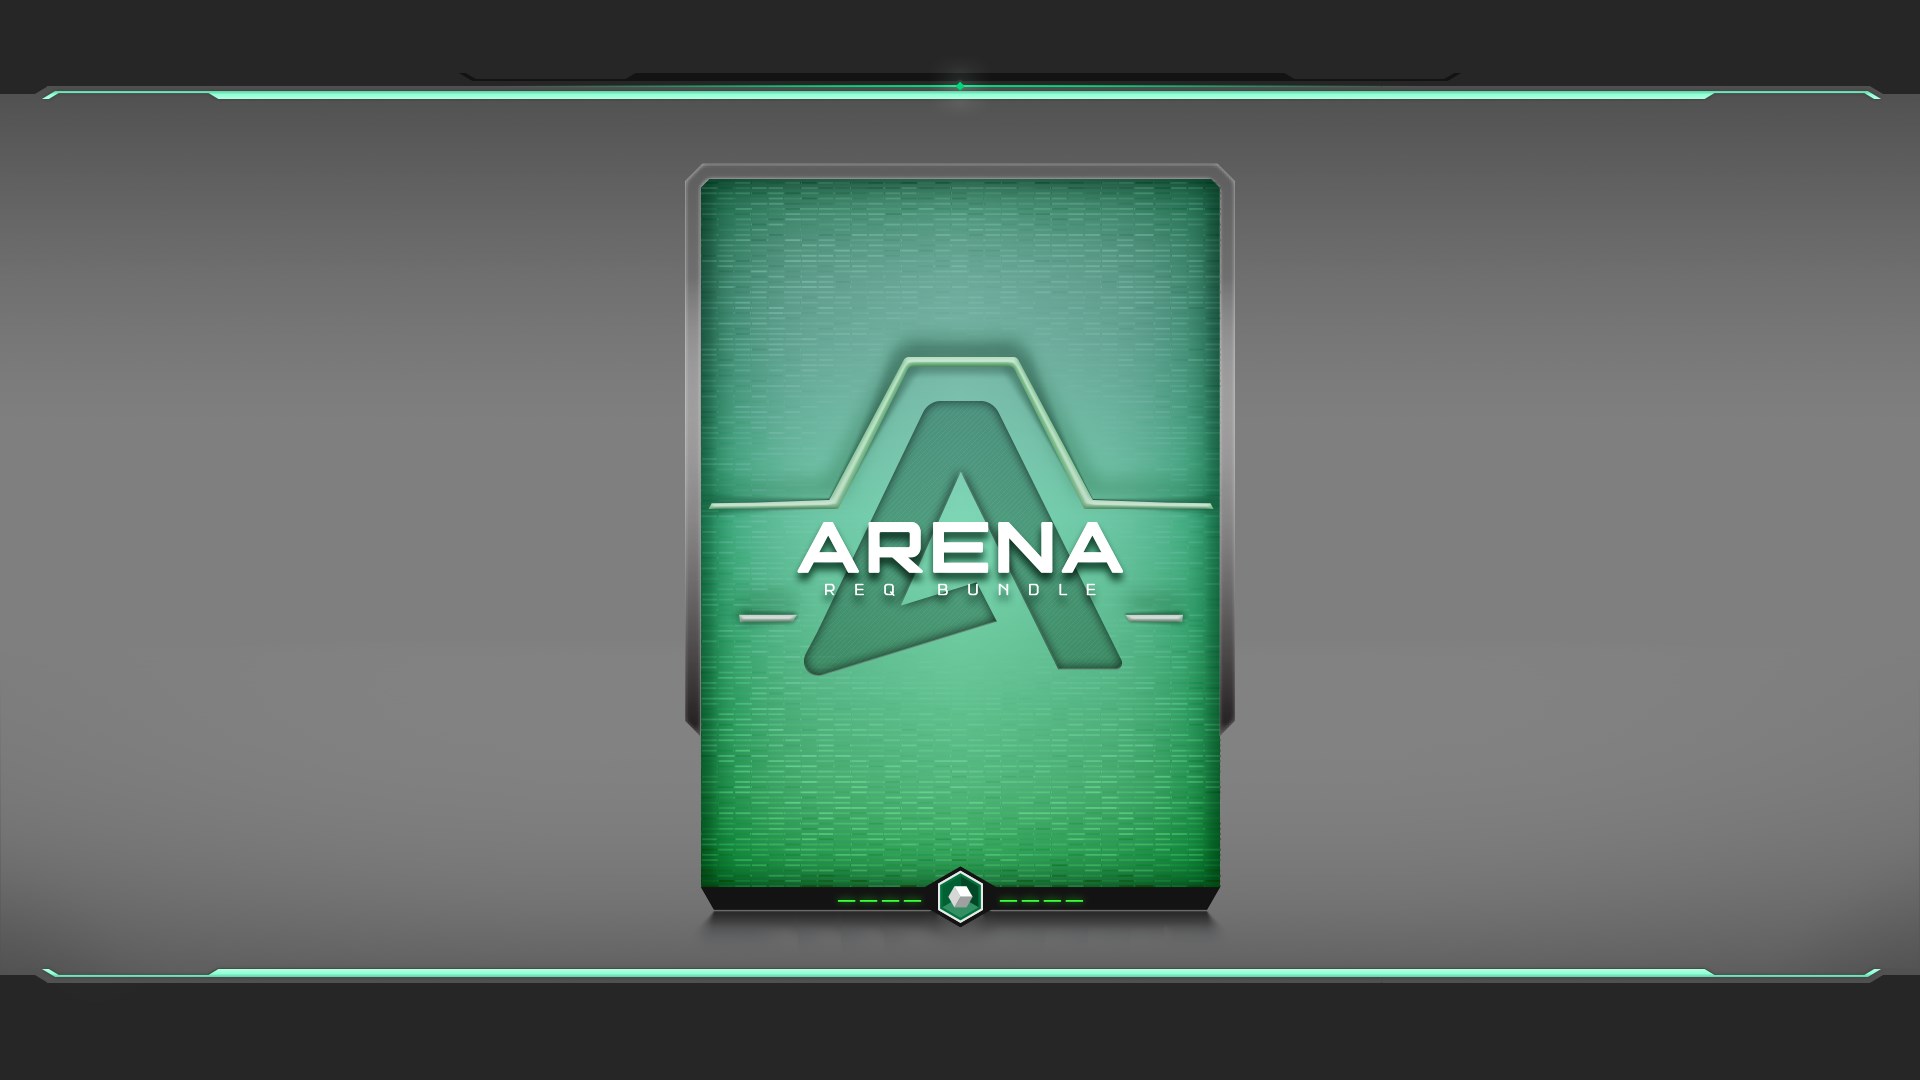 Halo 5 Guardians - Arena REQ Bundle DLC EU XBOX One CD Key 26.55$